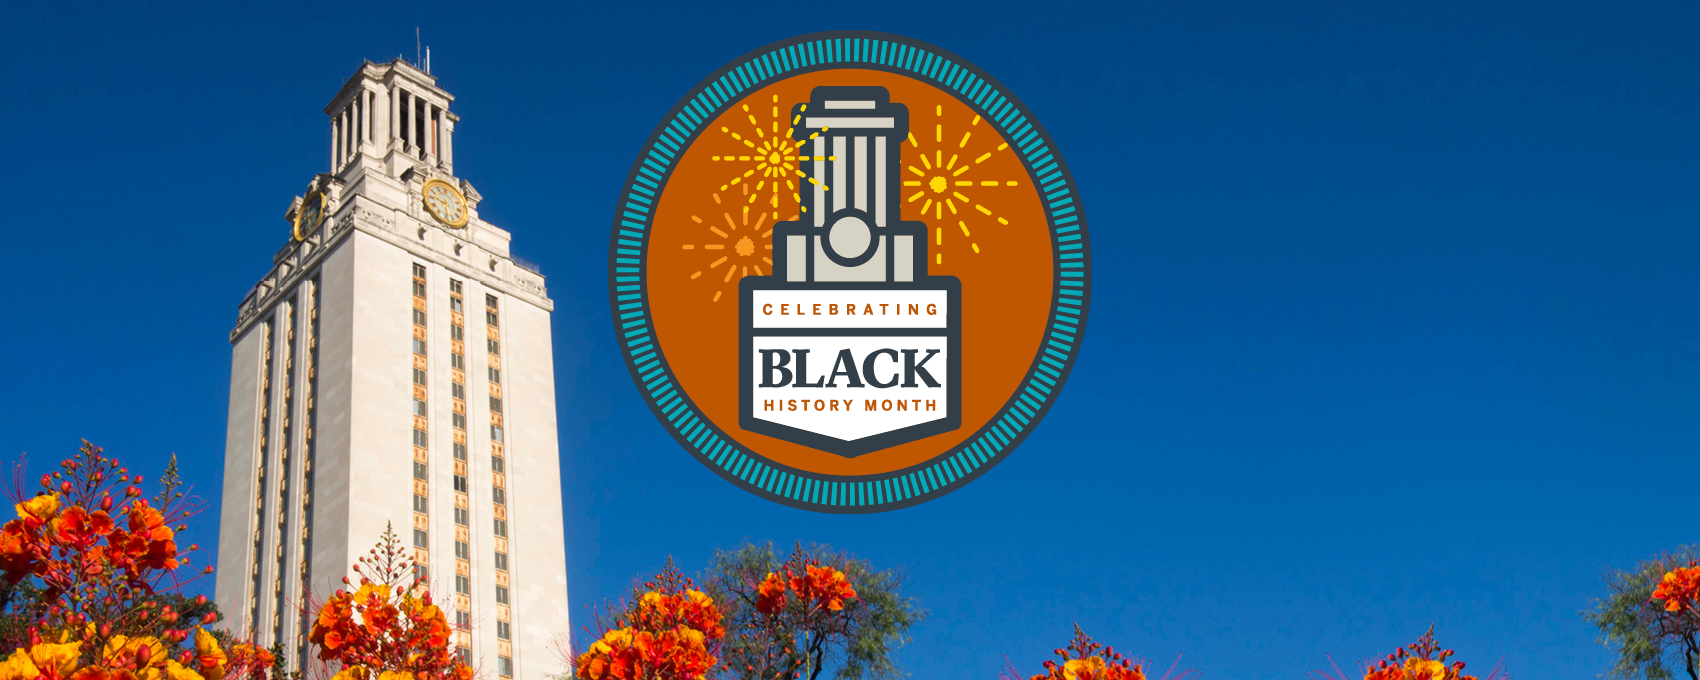 Celebrating Black History Month banner